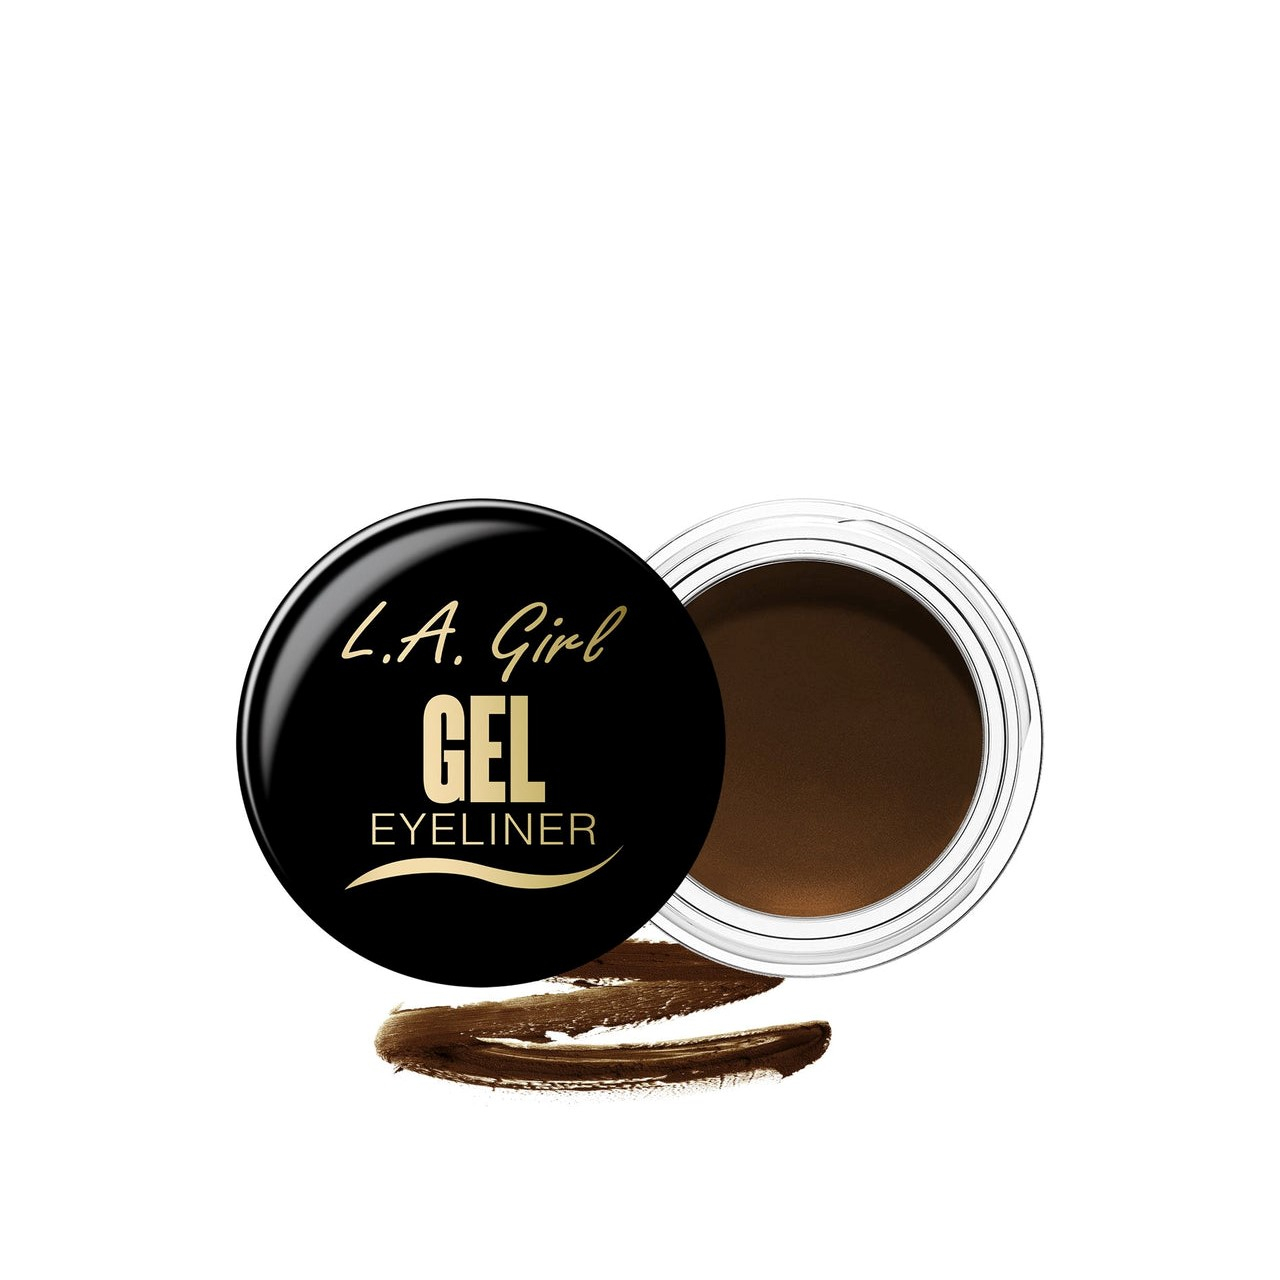 L.A. Girl Gel Eyeliner Rich Chocolate Brown 3g (0.11oz)